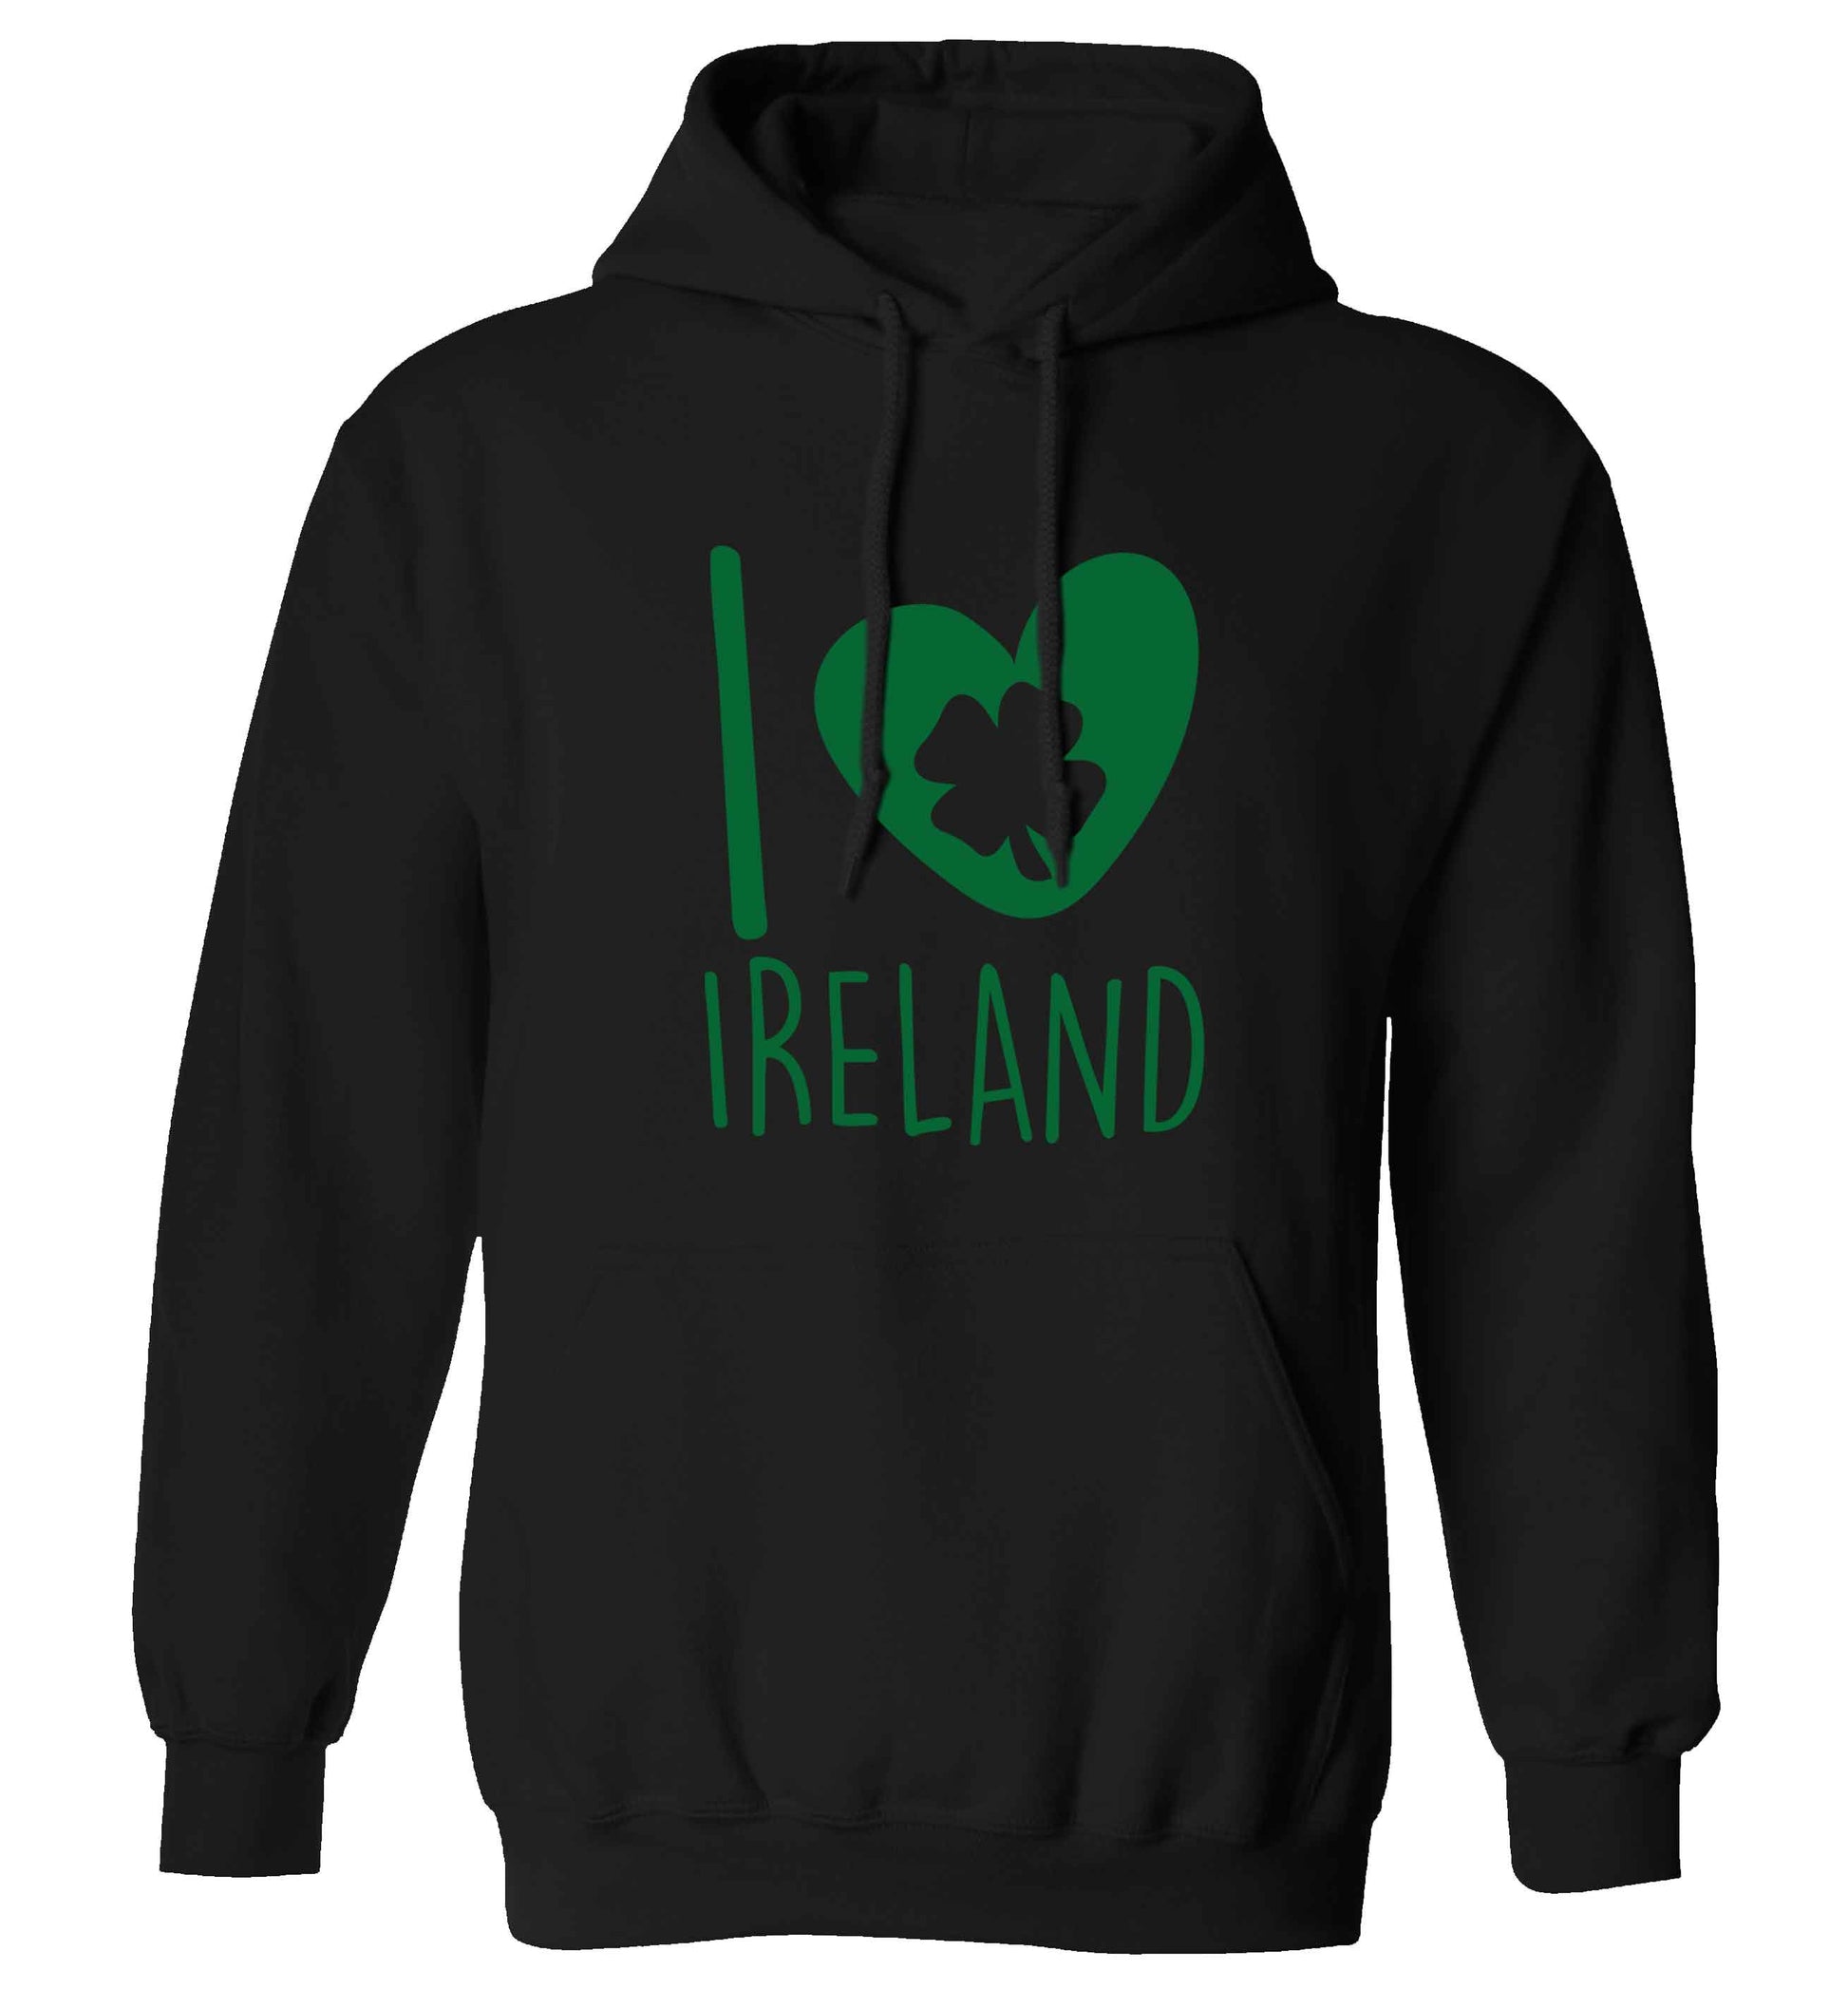 I love Ireland adults unisex black hoodie 2XL